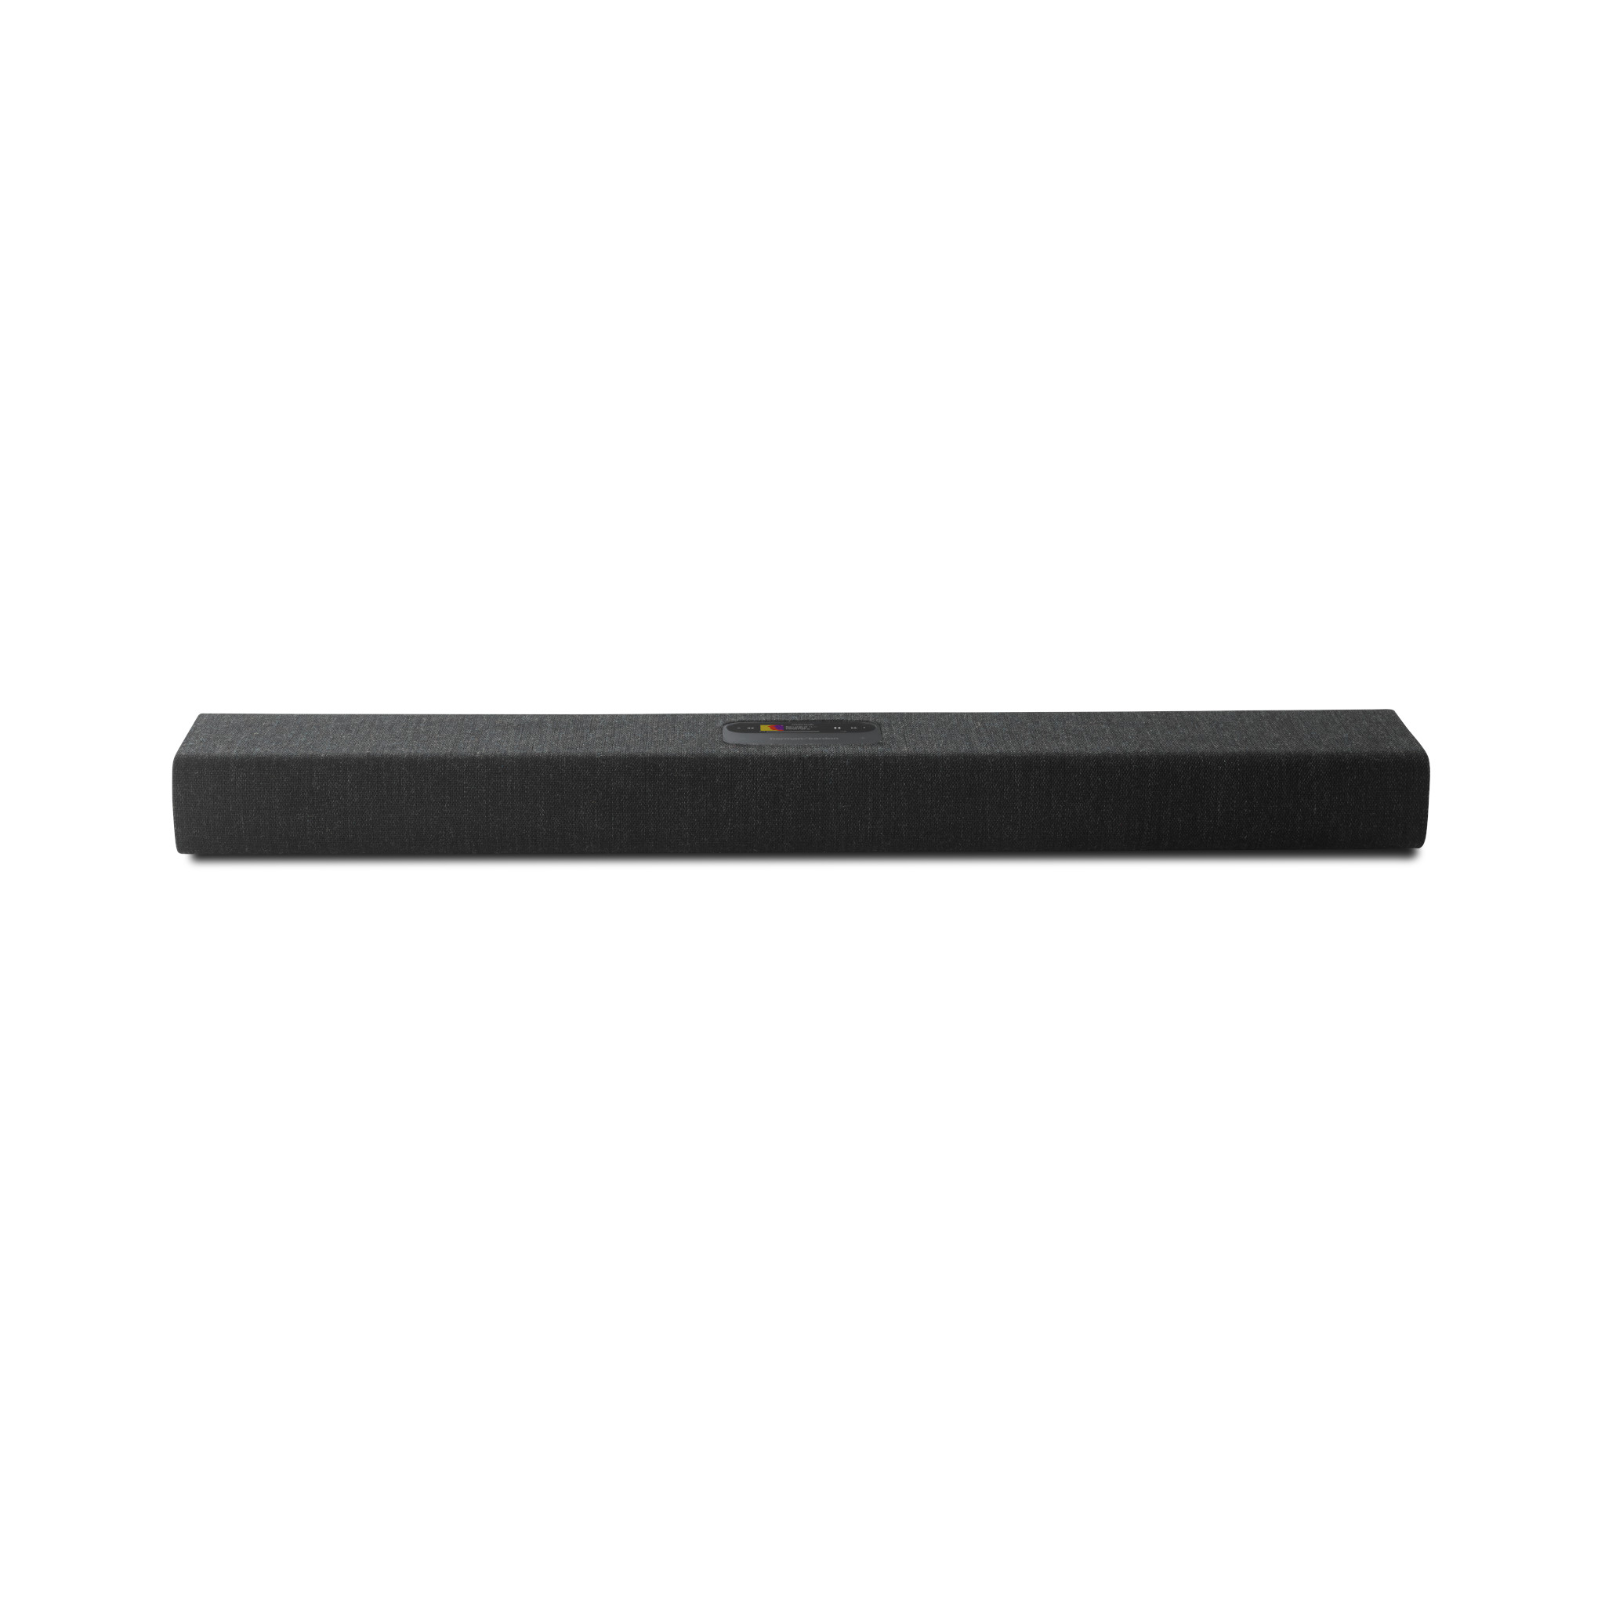 Harman Kardon Citation MultiBeam™ 700 - Black - The smartest, compact soundbar with MultiBeam™ surround sound - Front